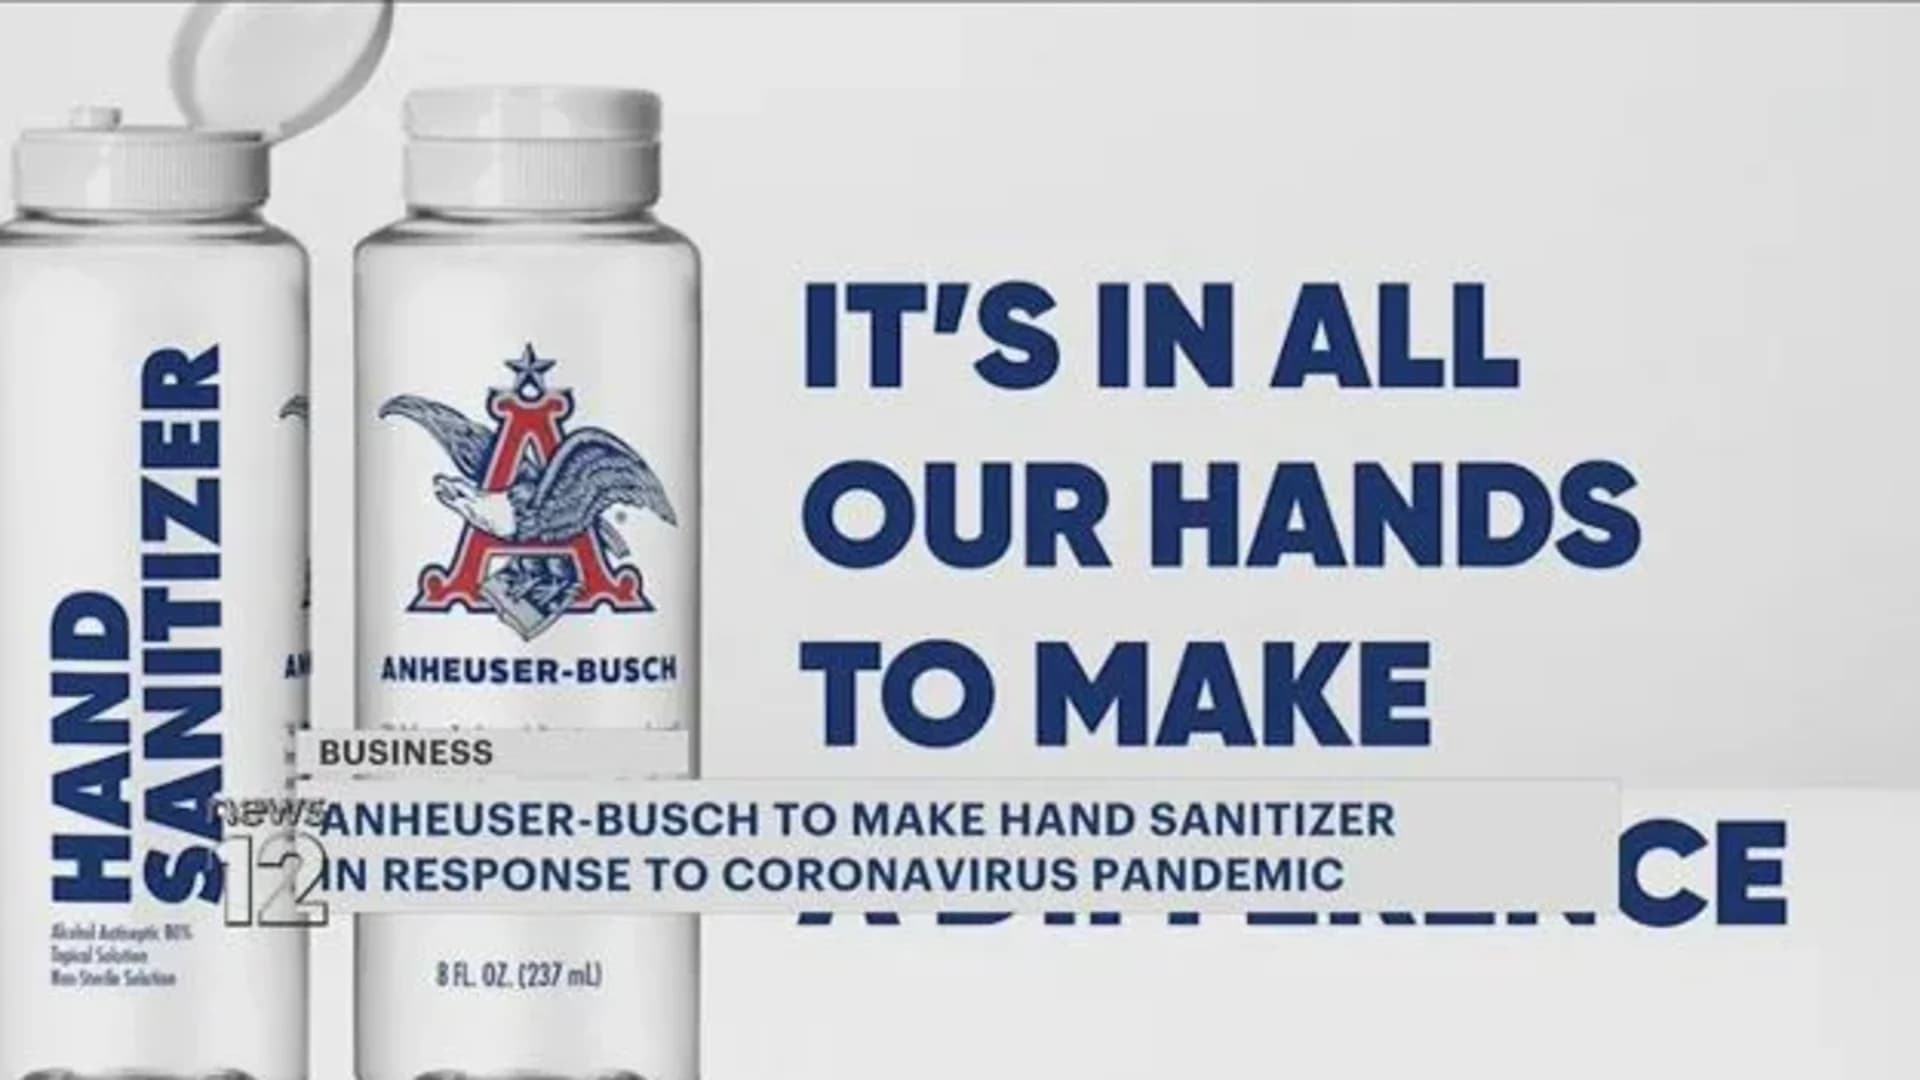 Anheuser-Busch to make hand sanitizer in response to coronavirus pandemic